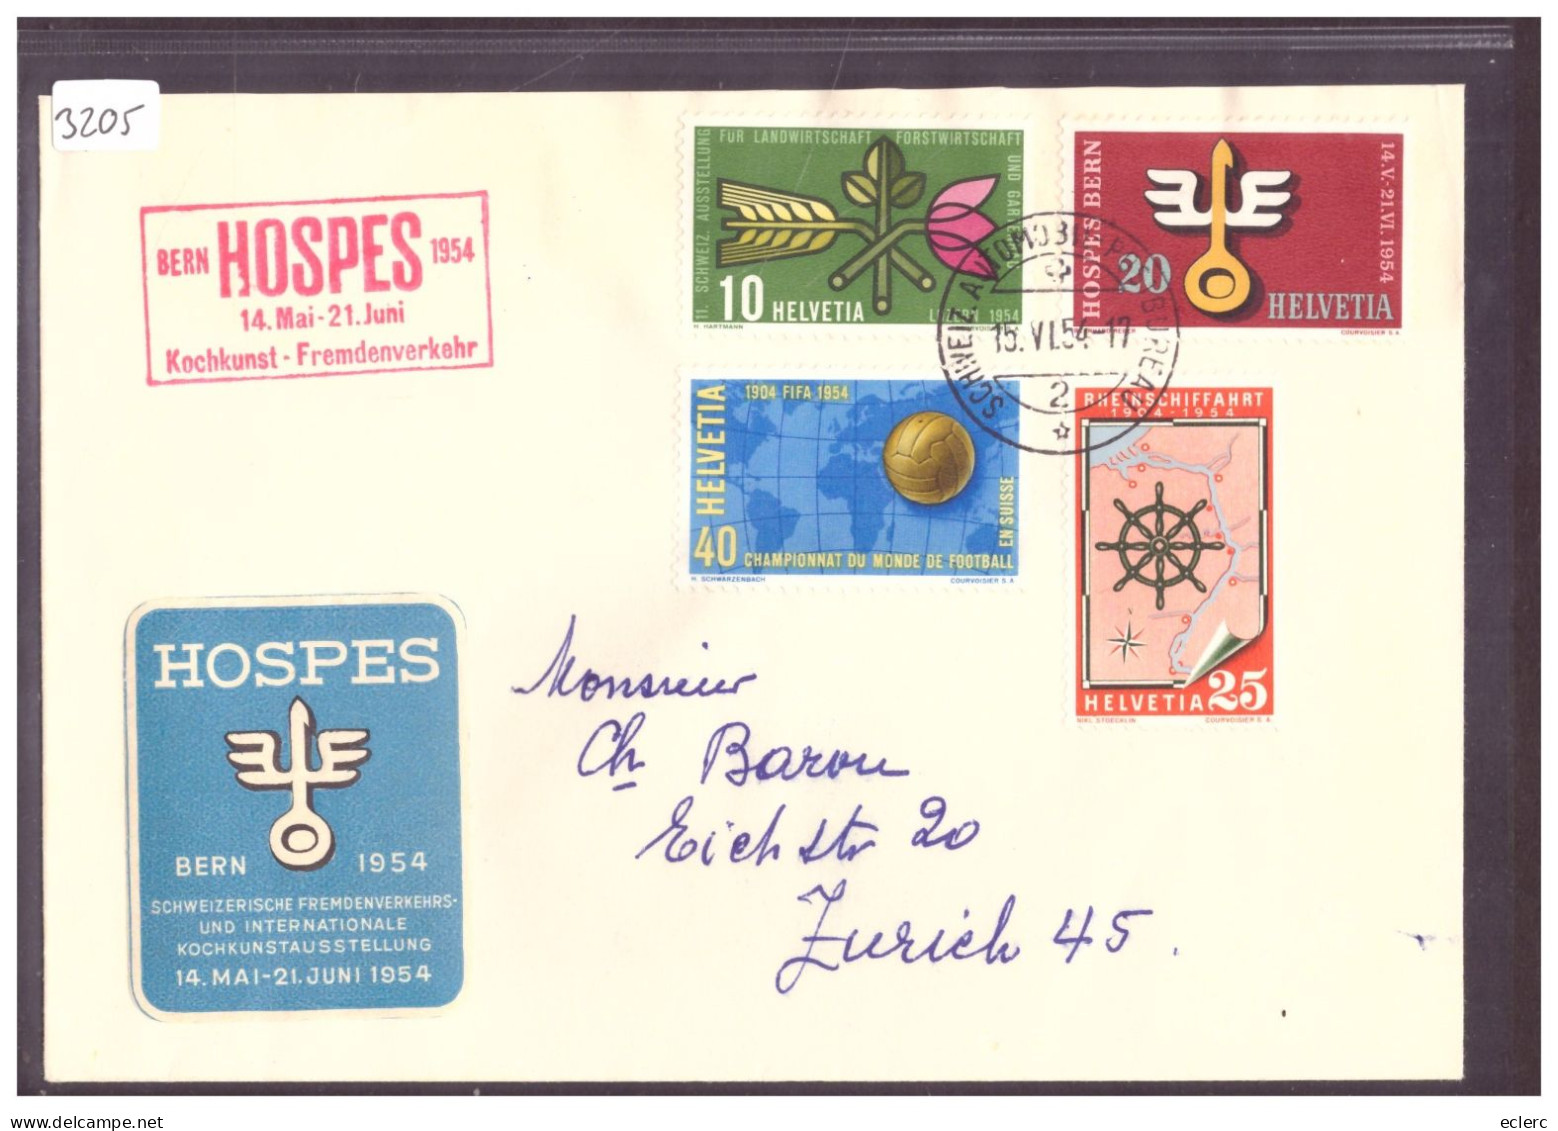 BERN HOSPES 1954 - SERIE TIMBRES AVEC VIGNETTE - Covers & Documents